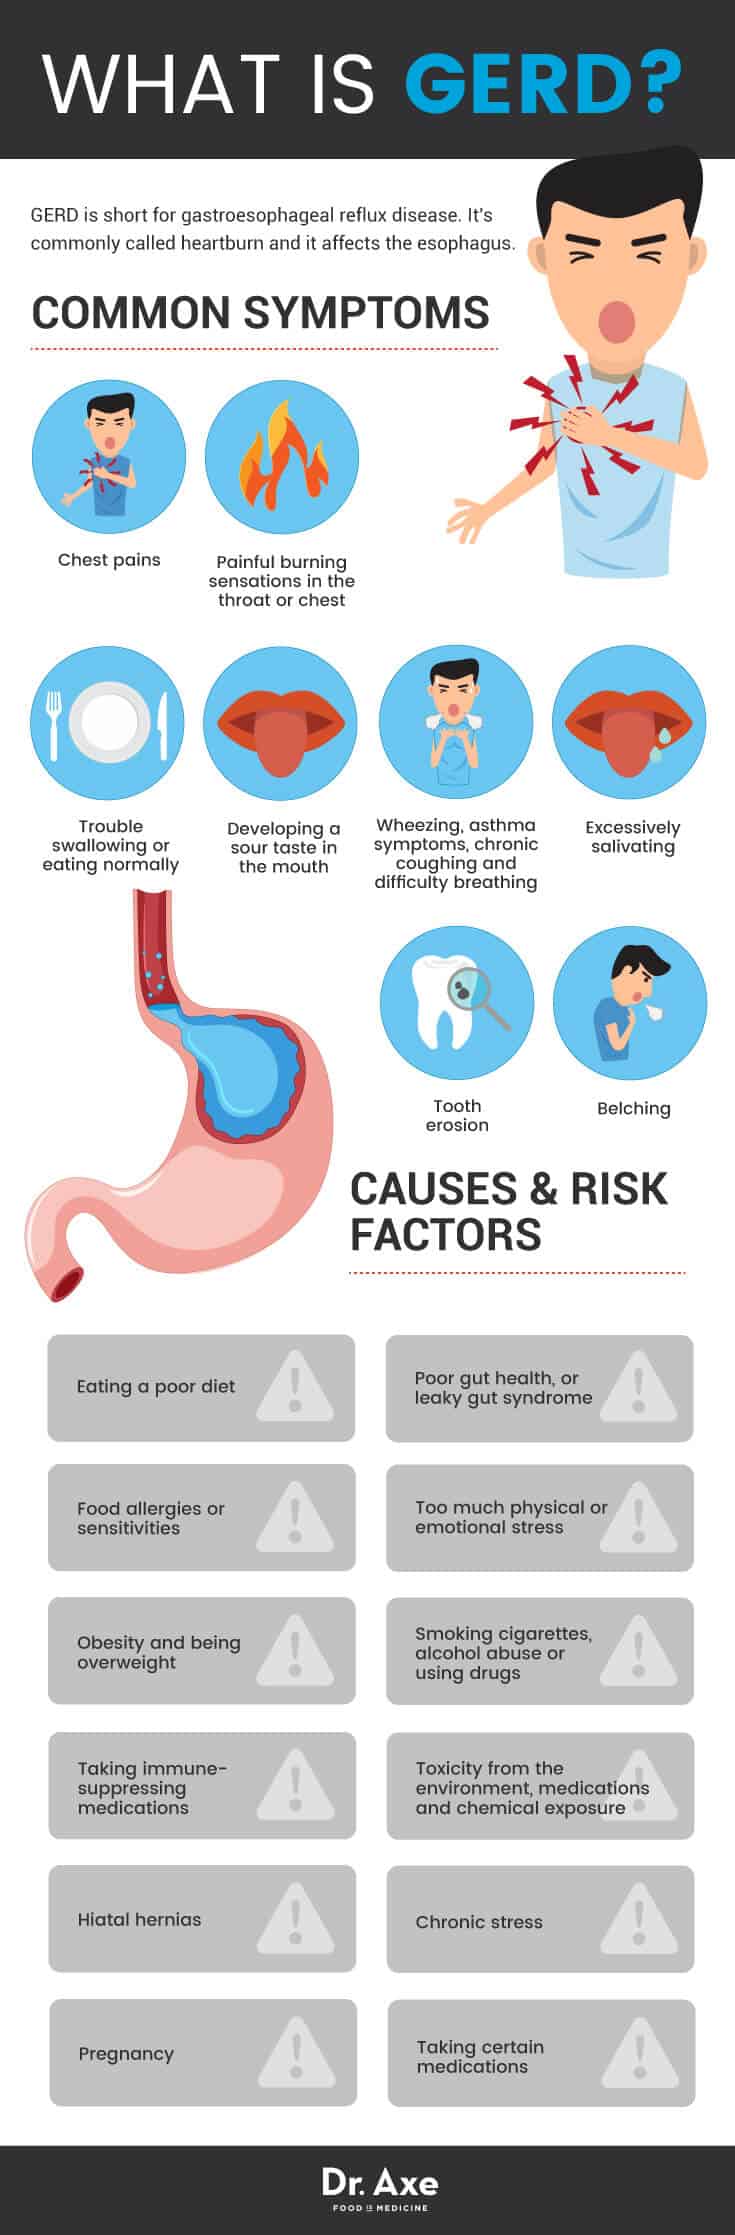 GERD causes & symptoms